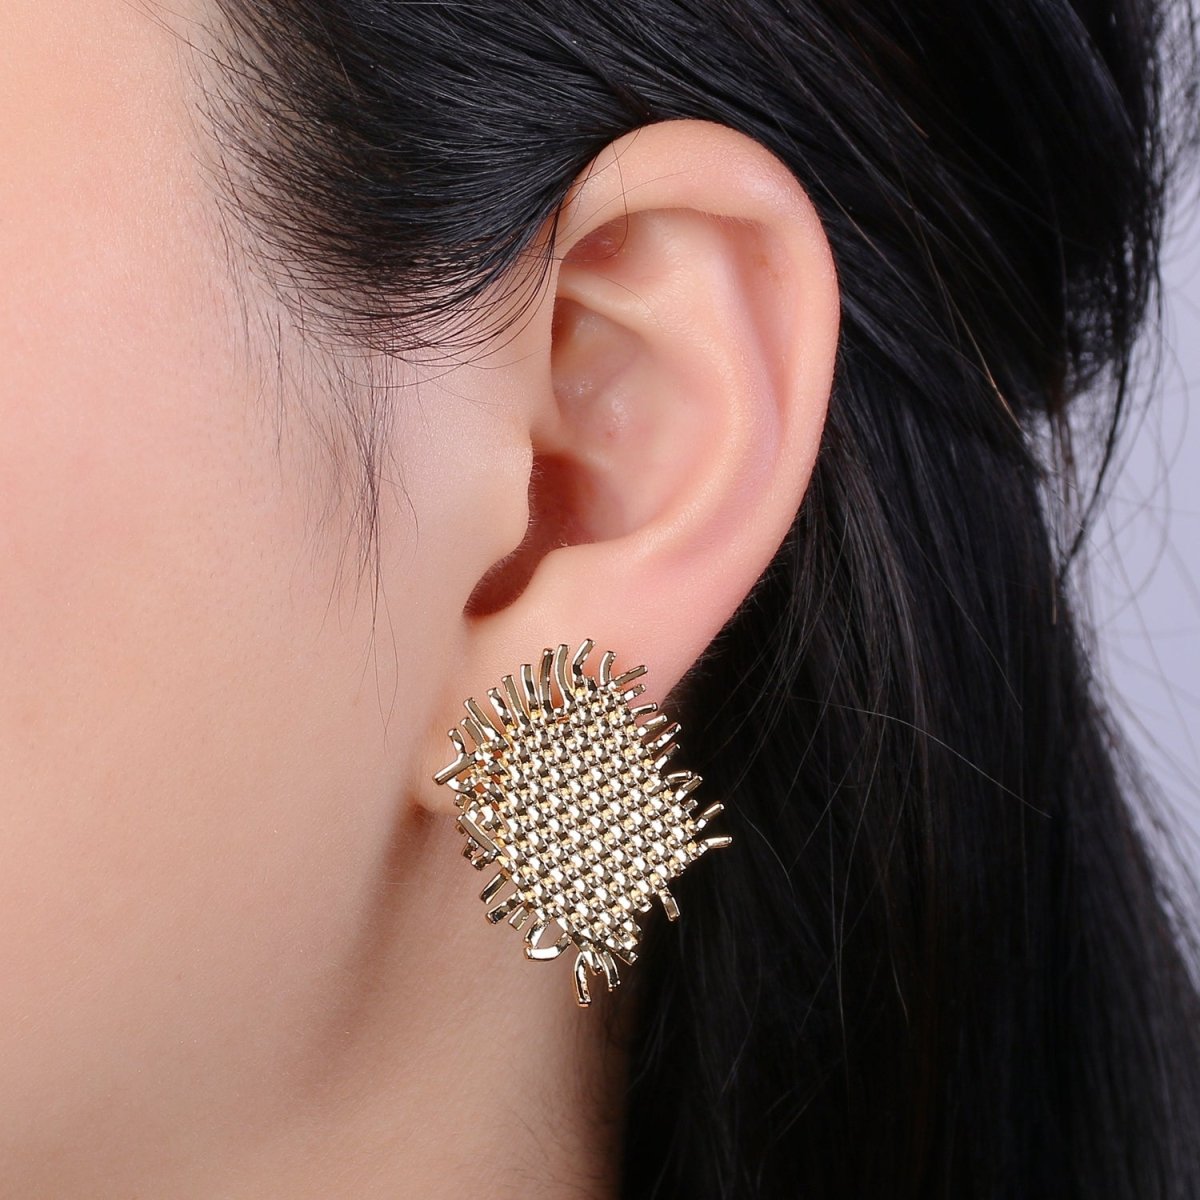 Golden Honey Comb Webbing Braid Studs Earring, Plain Gold Geometric Rectangle Nature Braid Shape Earring Jewelry GP-888 - DLUXCA